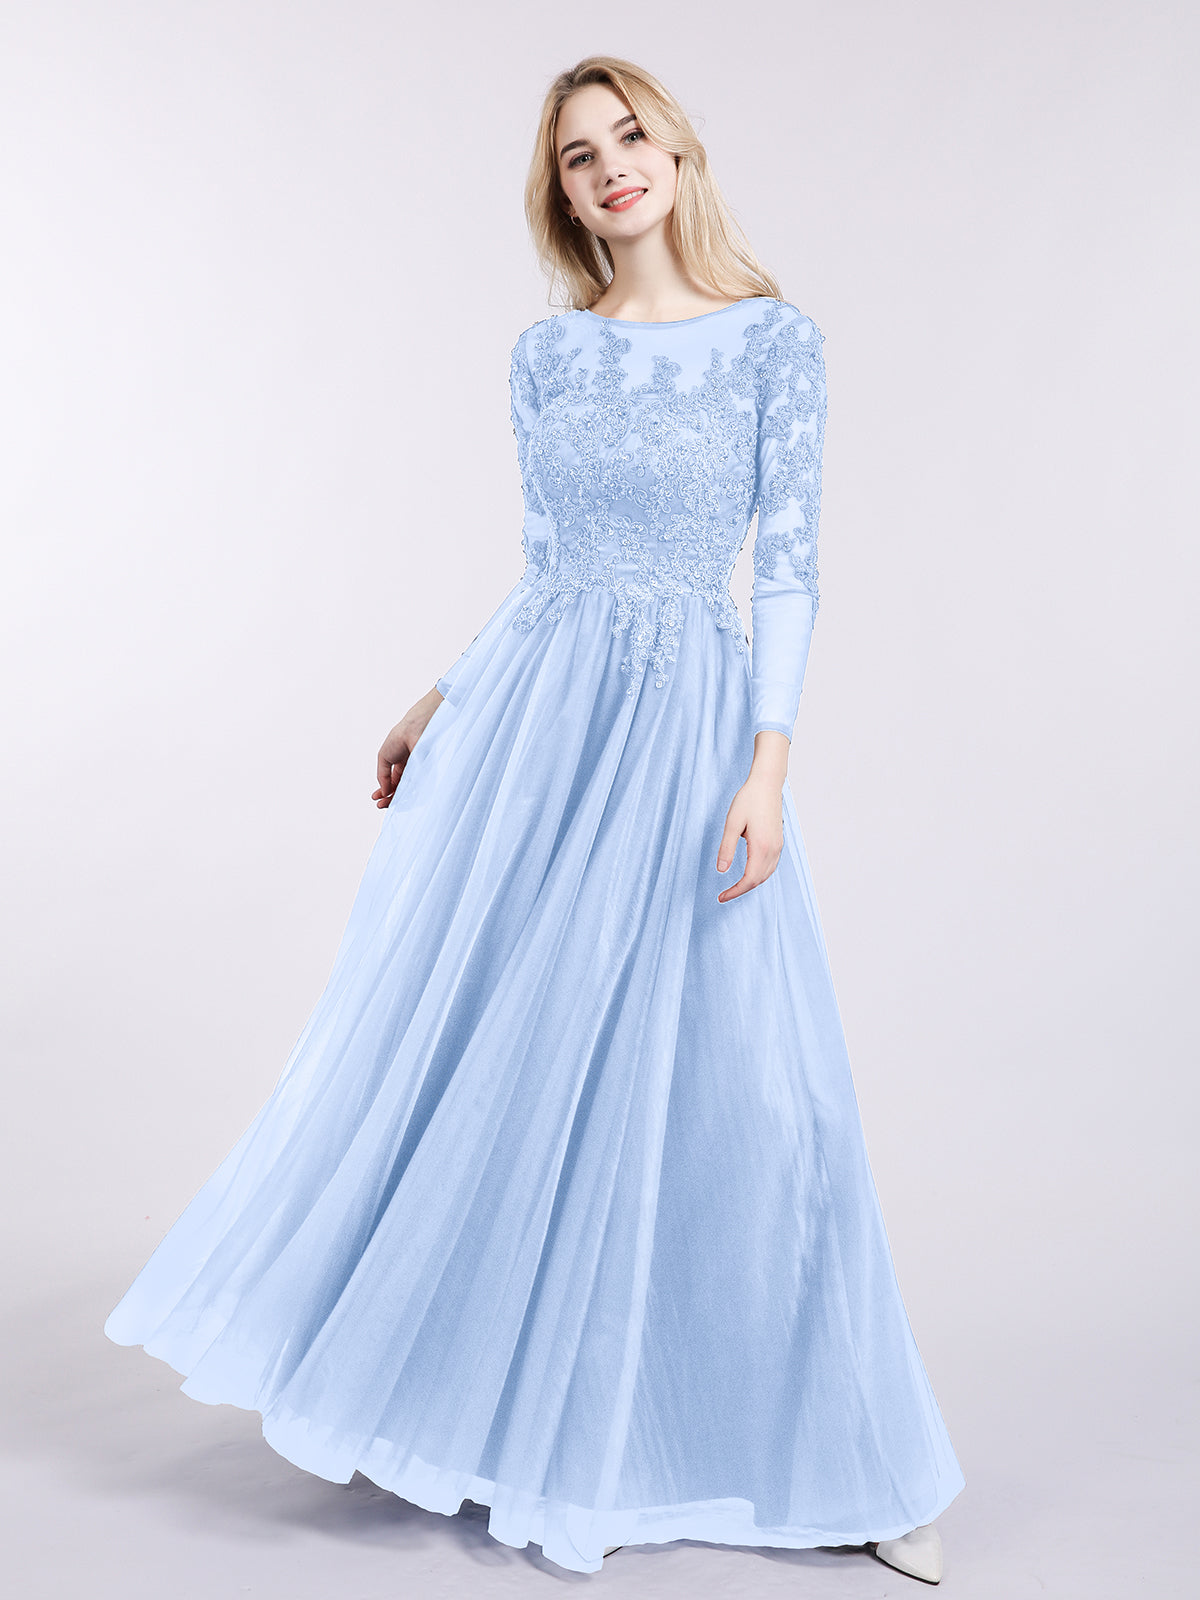 sky blue dress